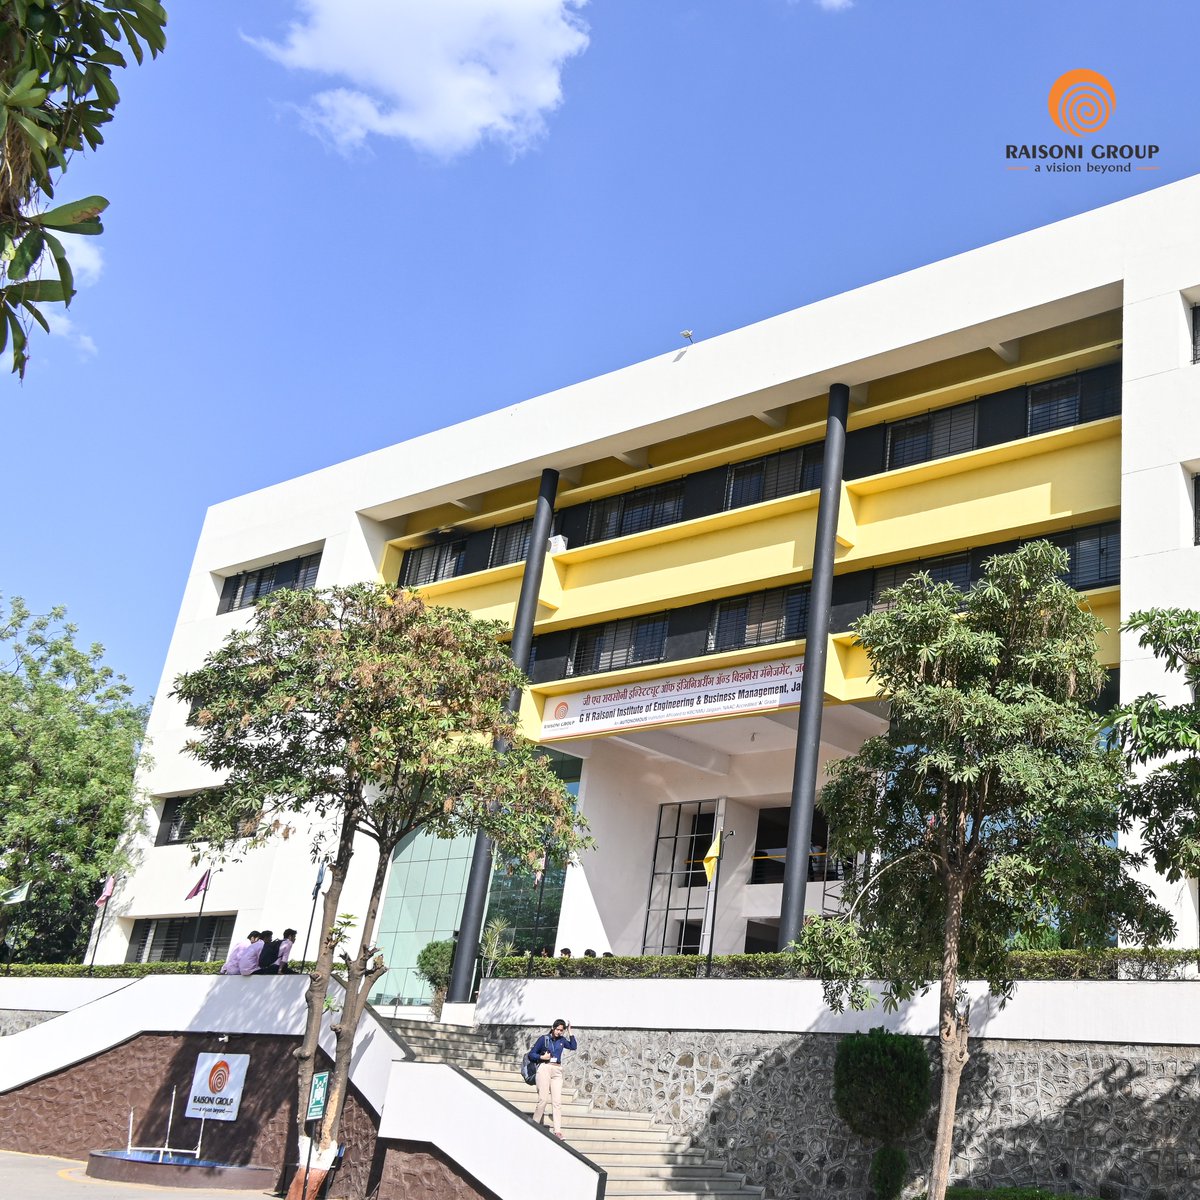 Where knowledge meets architectural elegance. 🏫

#Raisoni #RGI #AVisionBeyond #GHRIEBM #Jalgaon #collegelife #collegepremises #raisonicollegejalgaon #collegecampus #GHRIEBMJalgaon